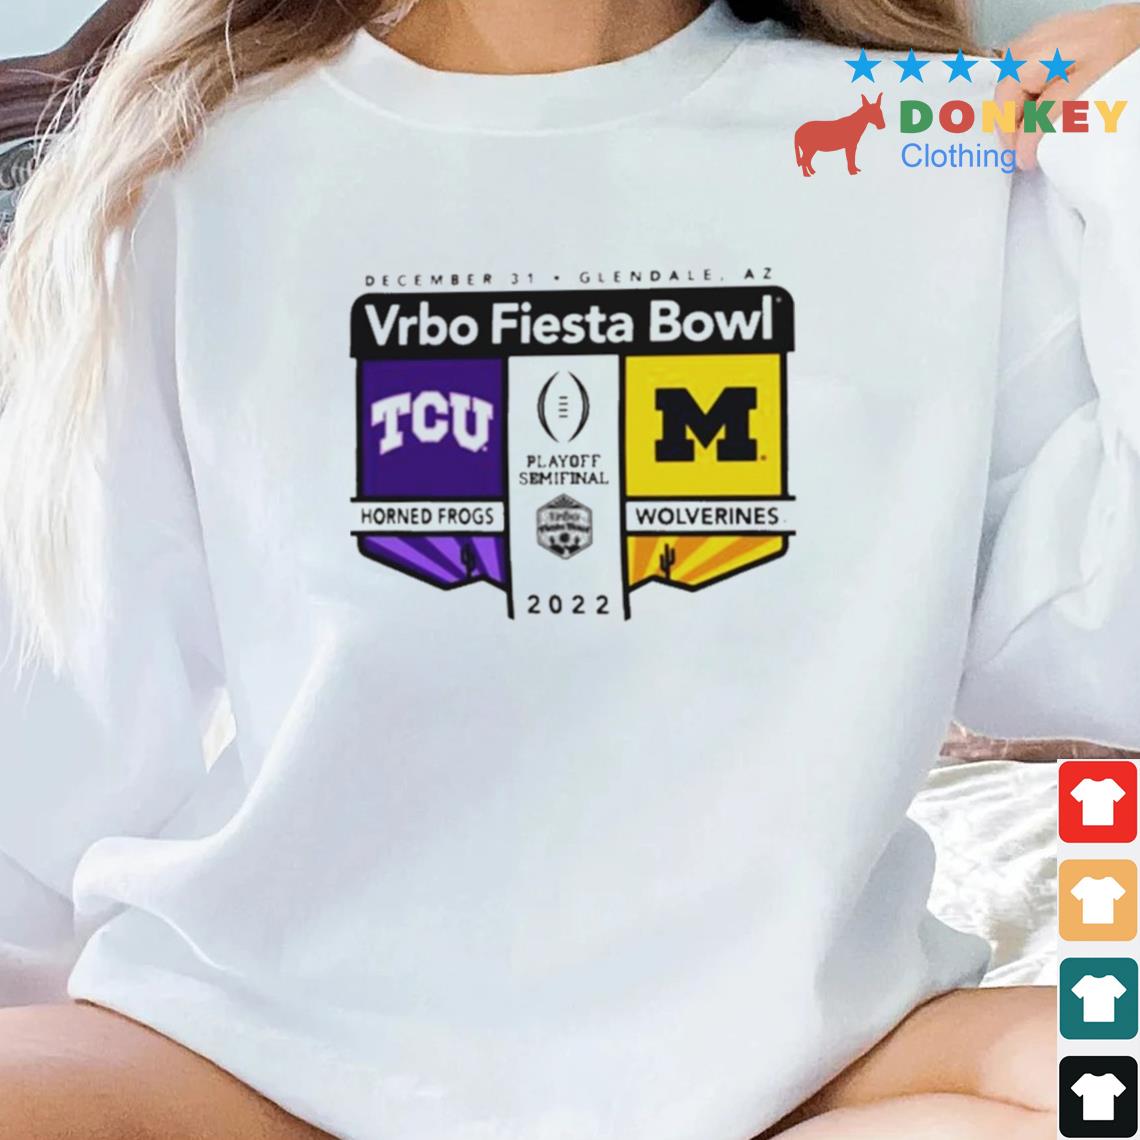 2022 CFP Semifinal Vrbo Fiesta Bowl Tcu vs Michigan Logo Matchup Shirt